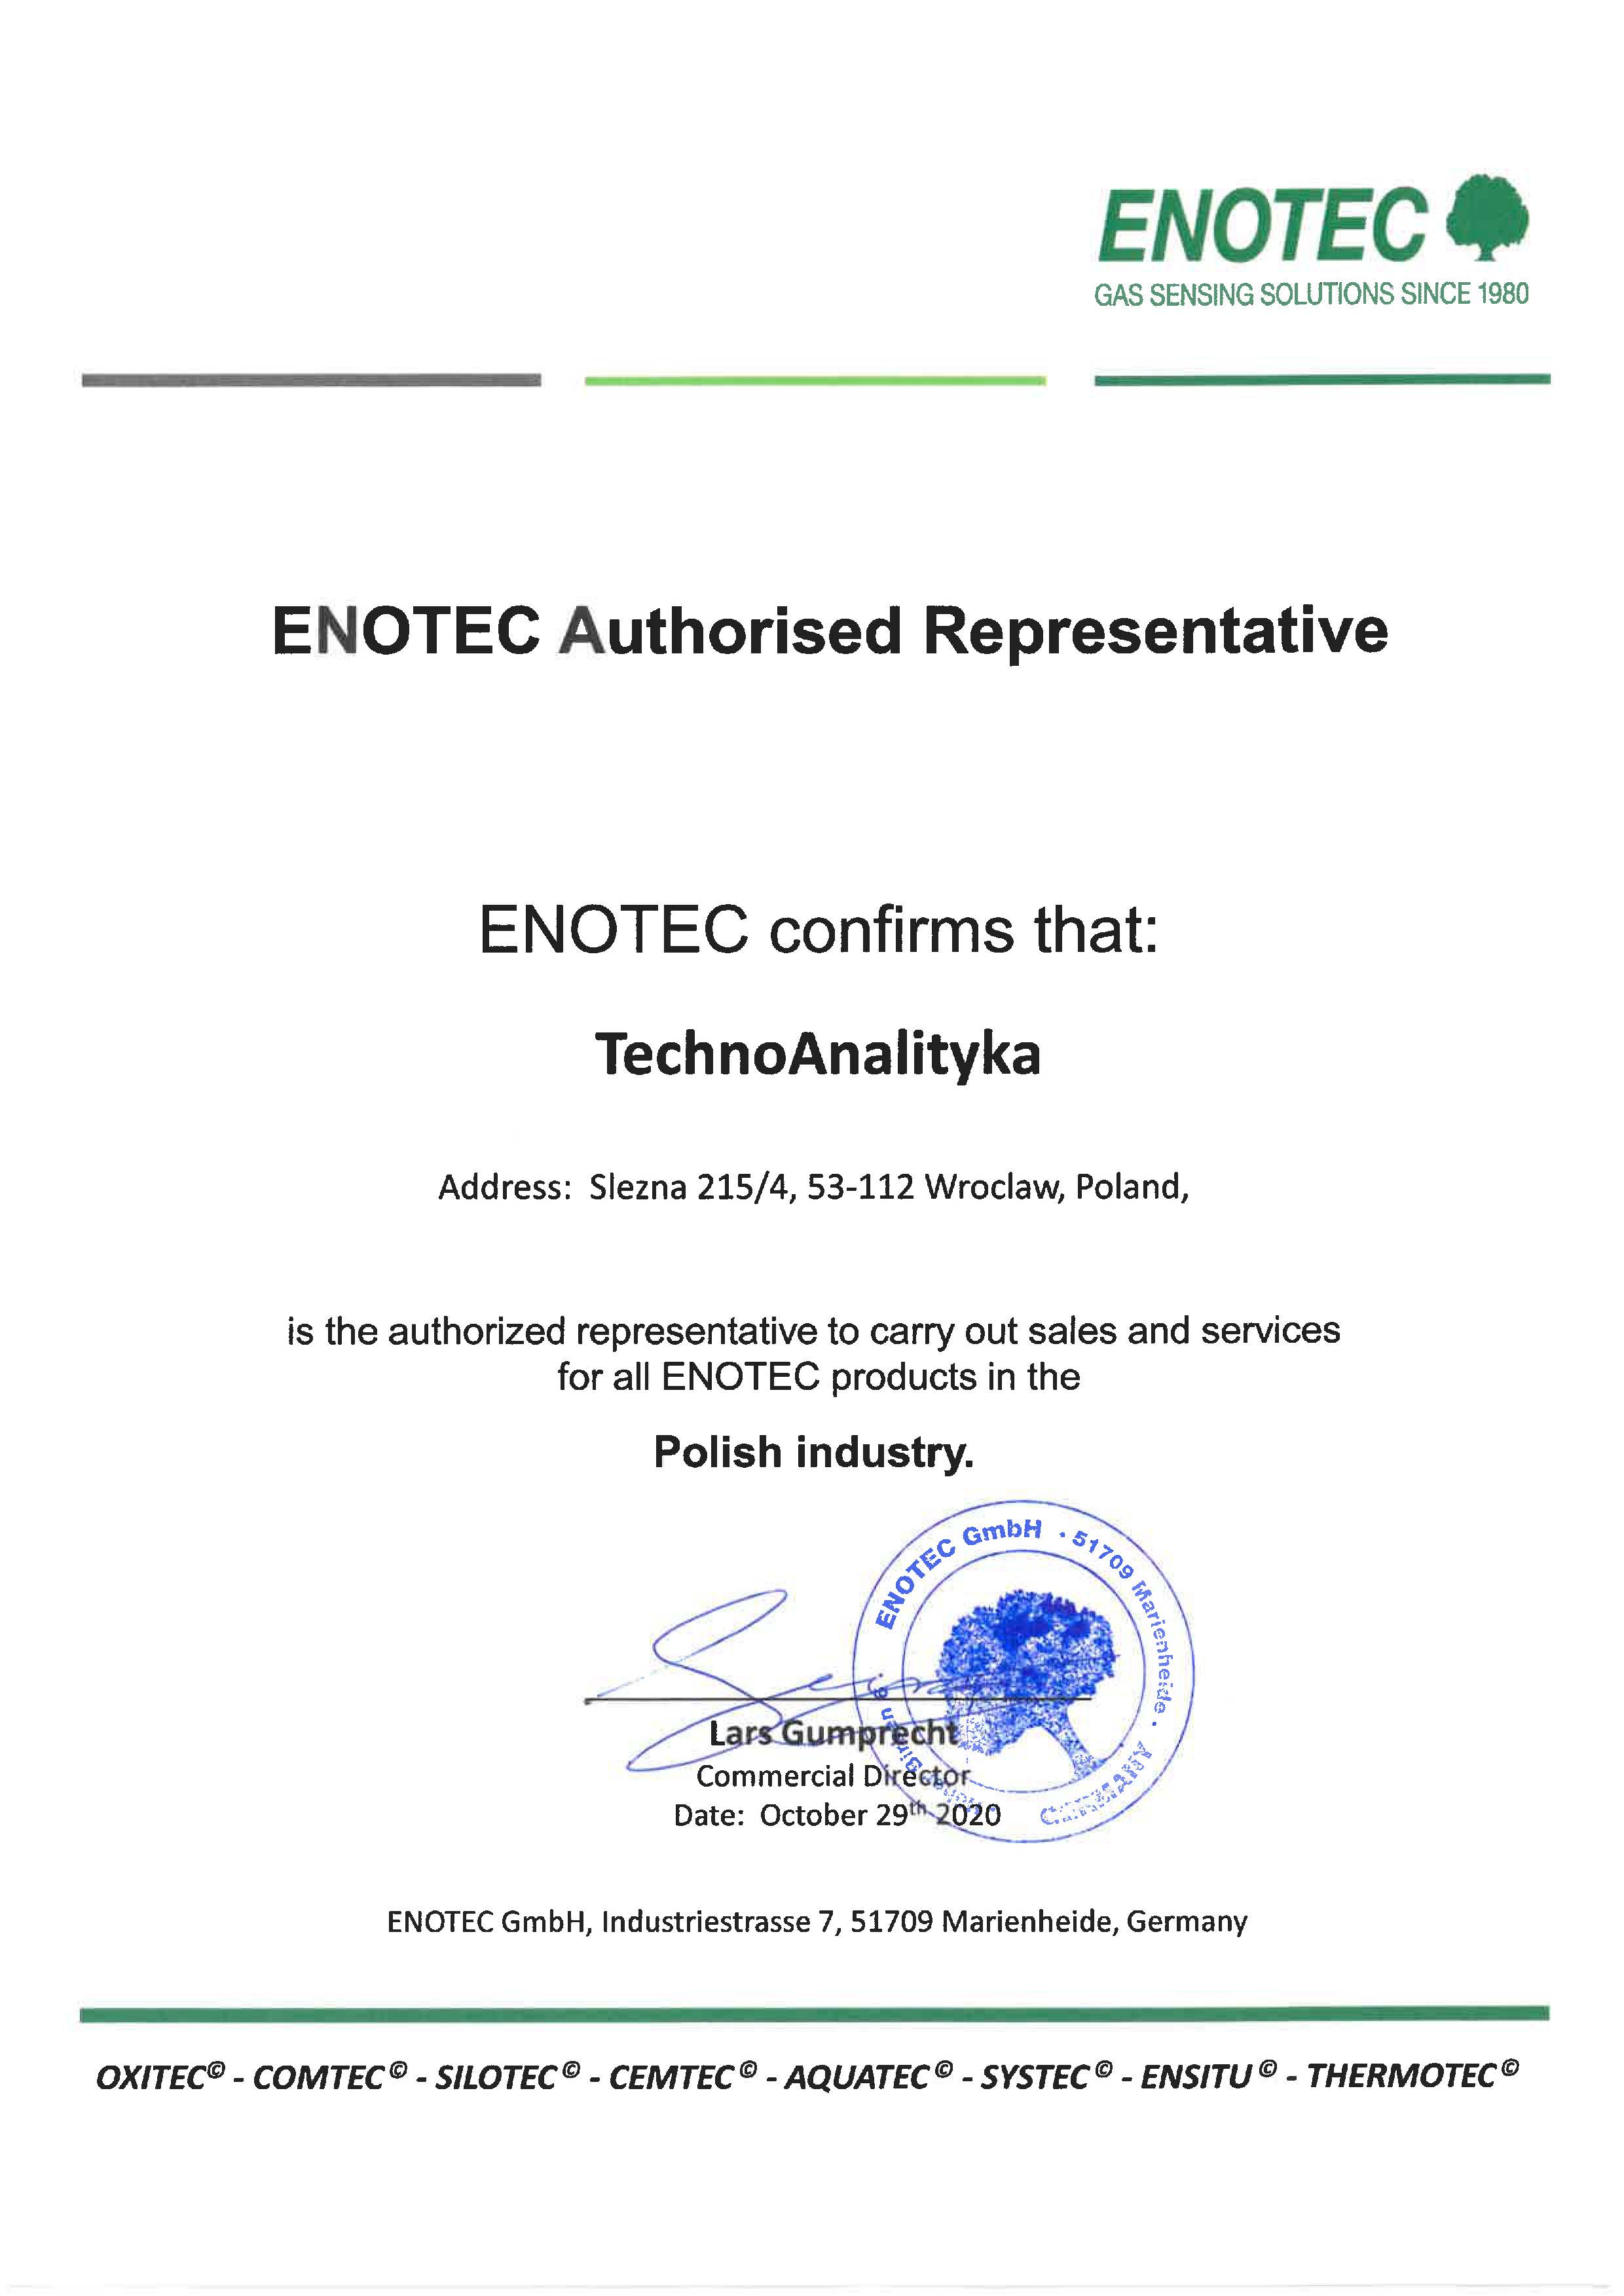 ENOTEC Authorized Representative Certificate